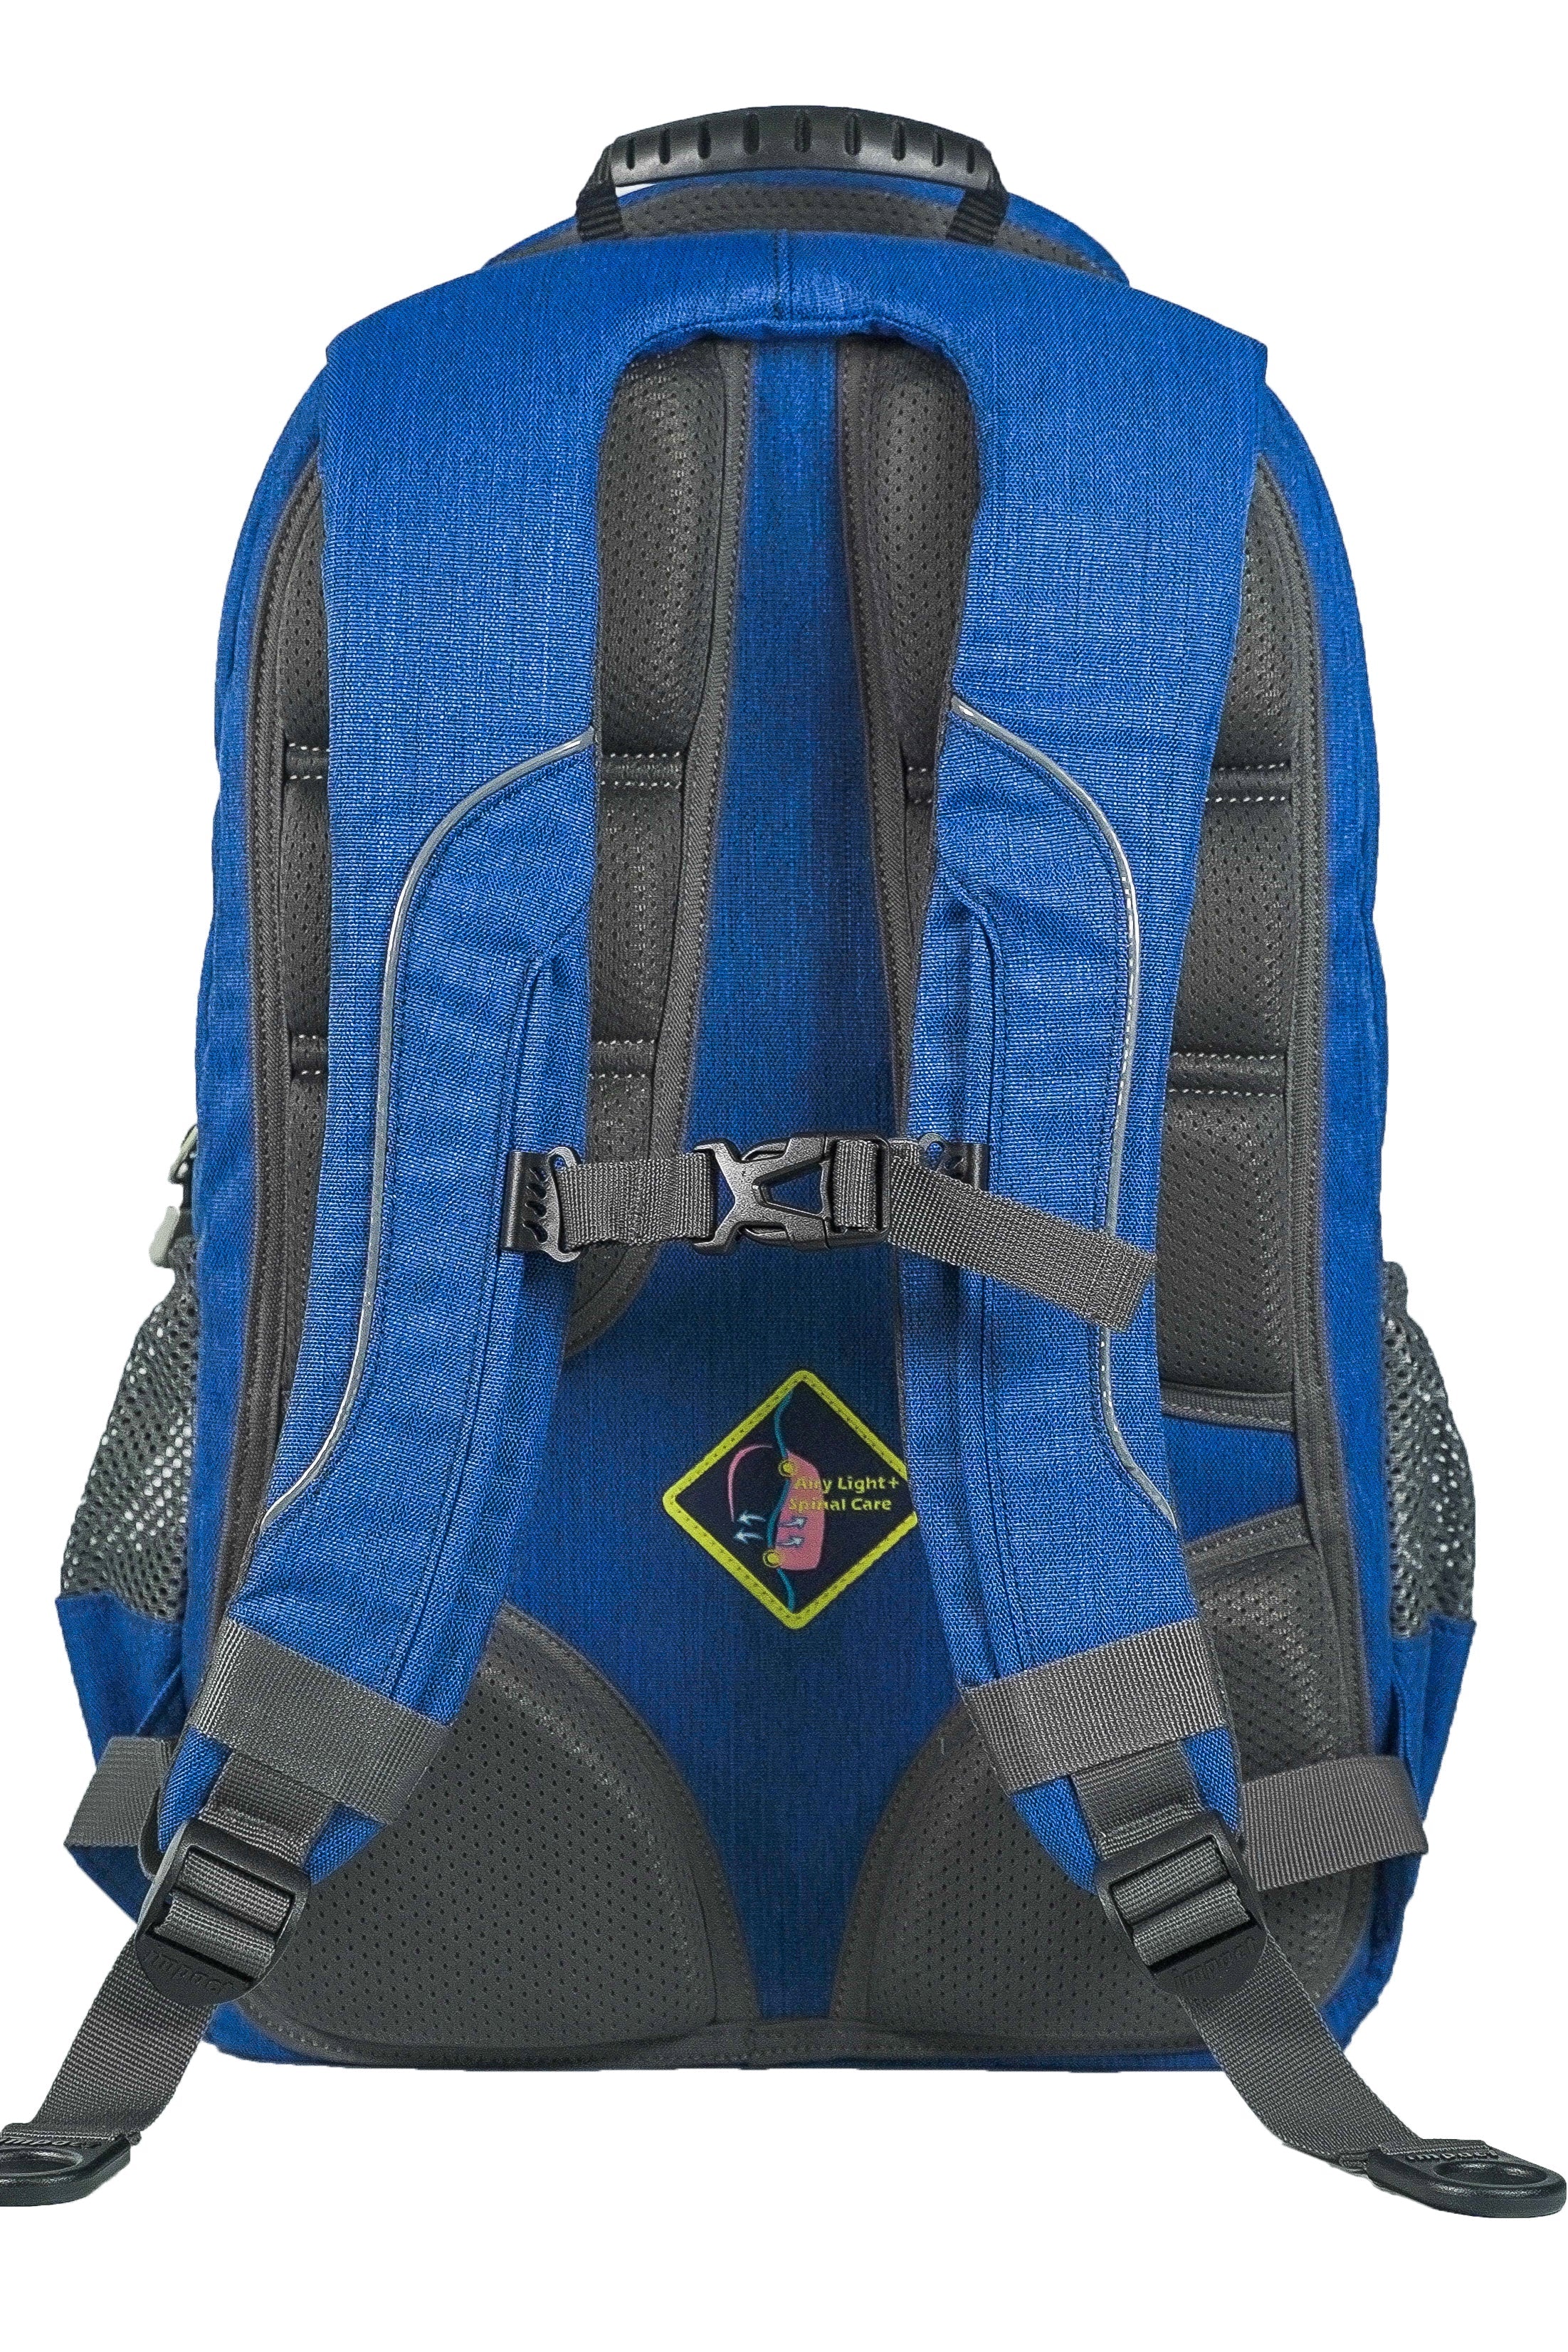 IMPACT - IPEG-163 Ergo-Comfort Spinal Support Backpack